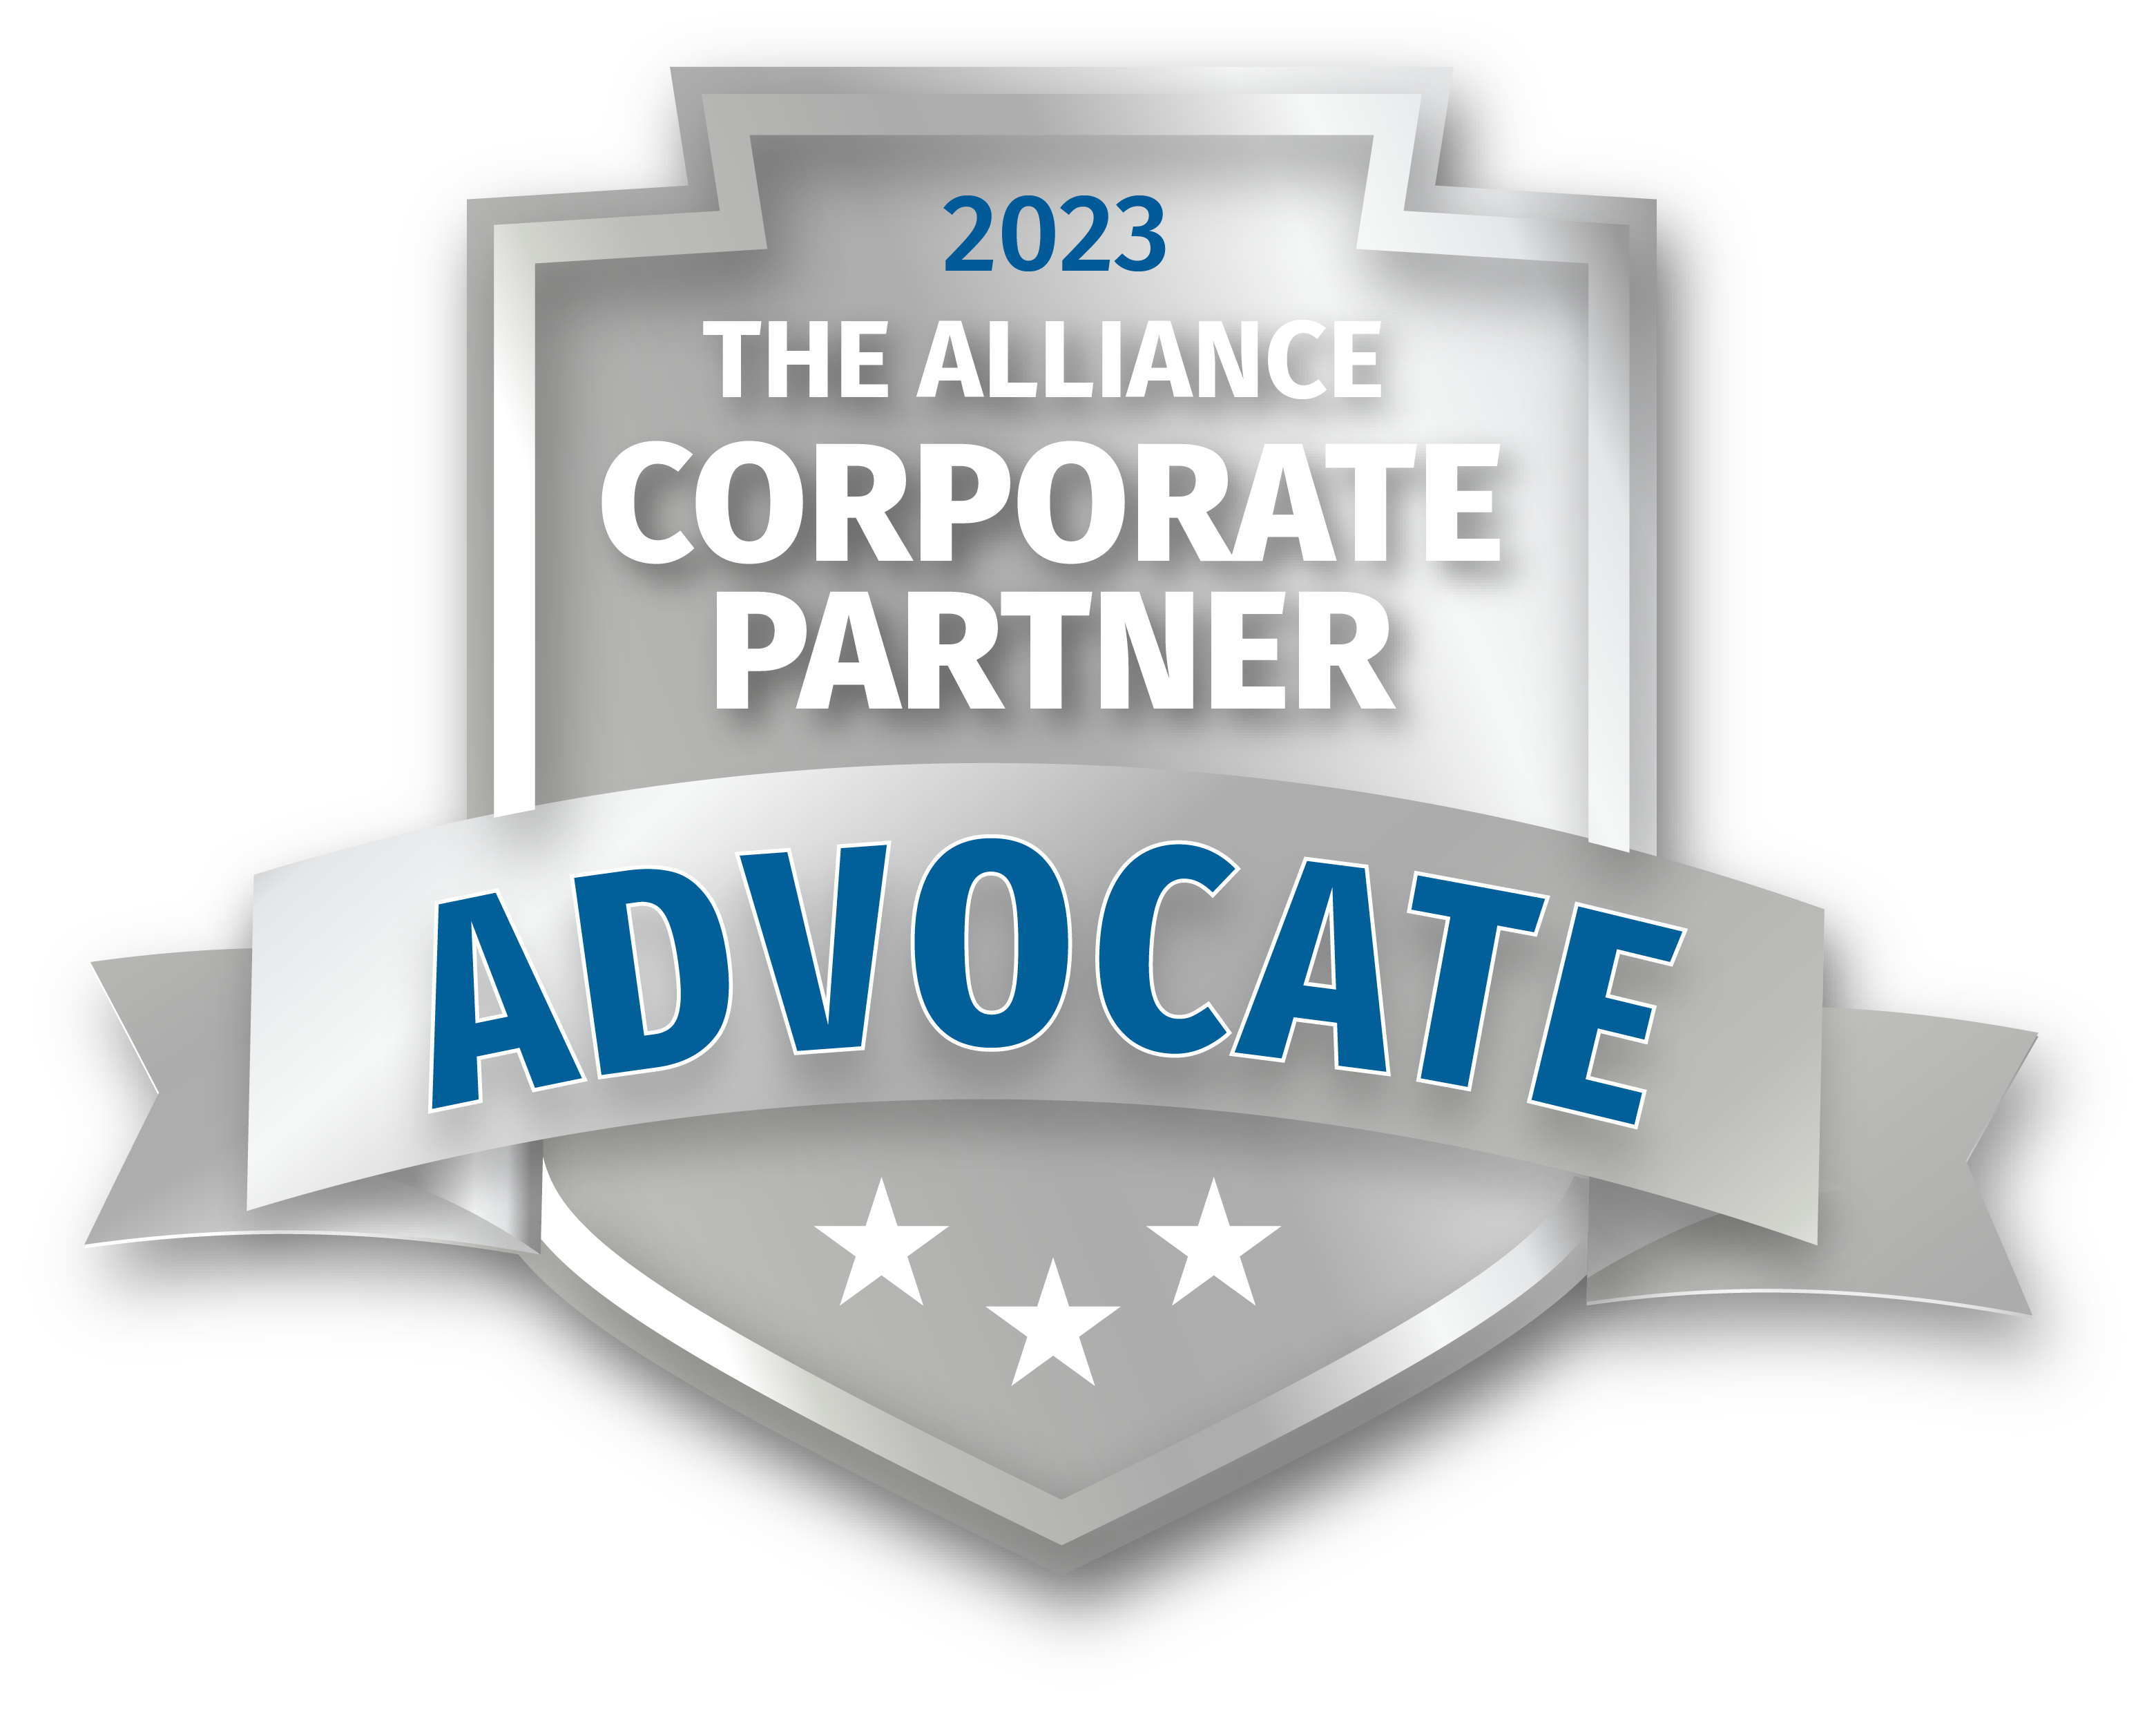 AllianceCorporatePartner 2023 Advocate